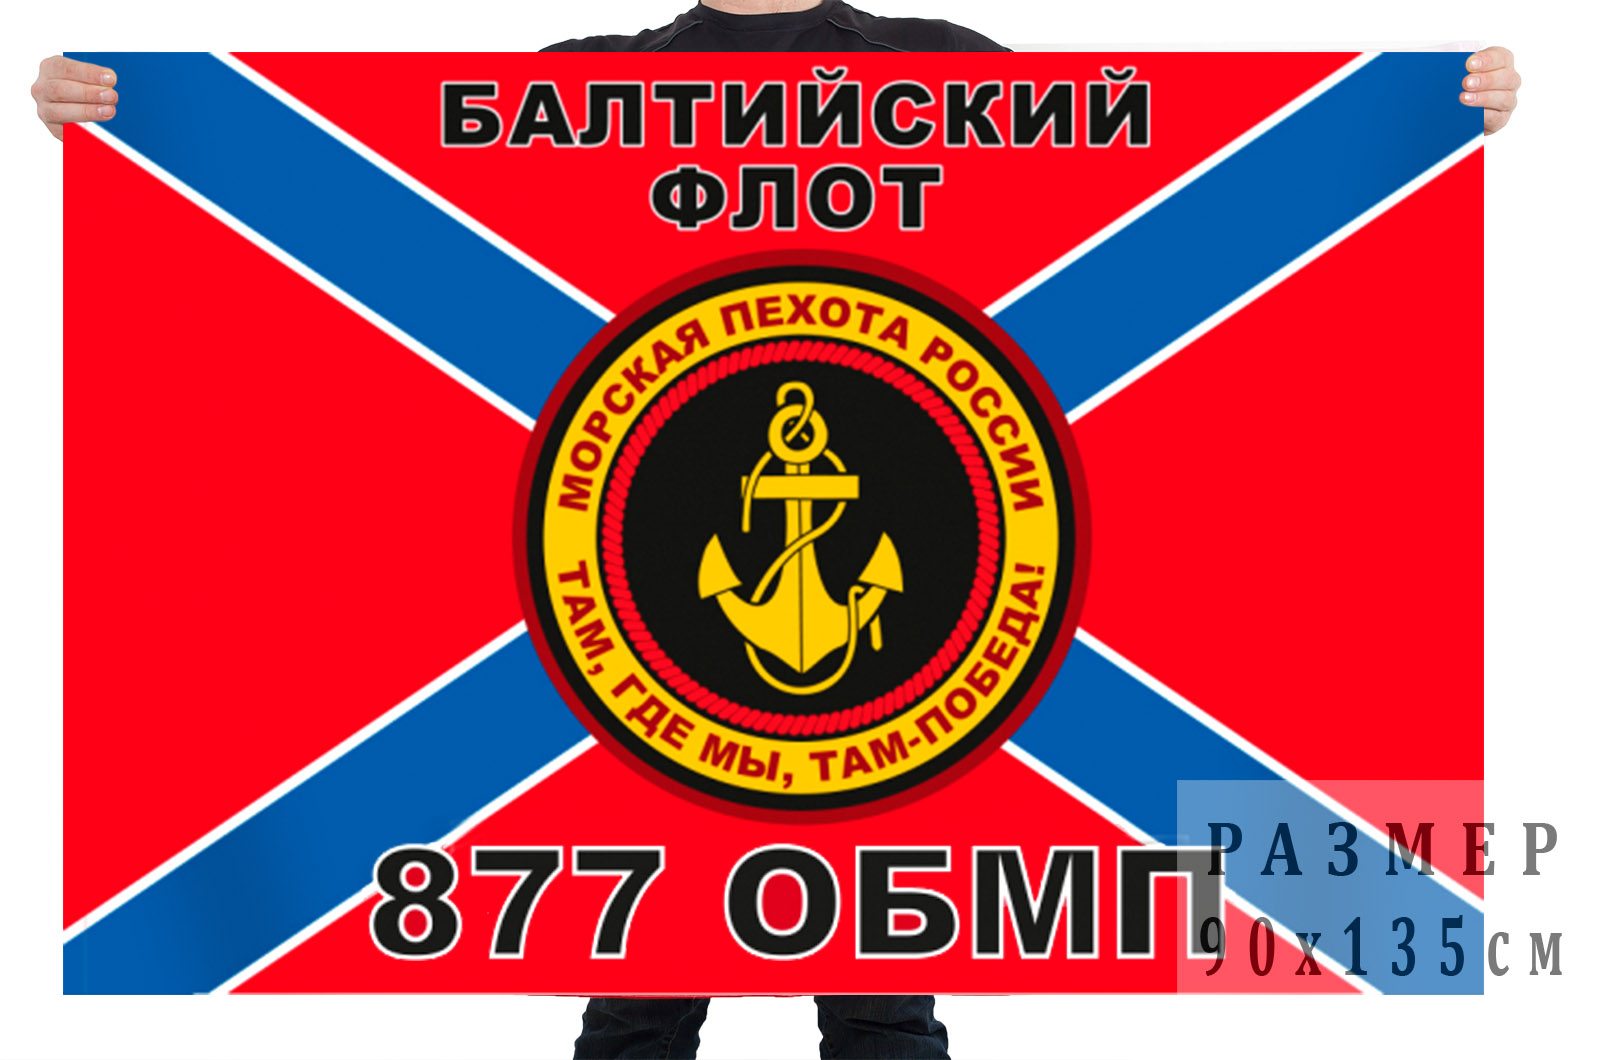 Флаг Морской пехоты 877 ОБМП Балтийский флот